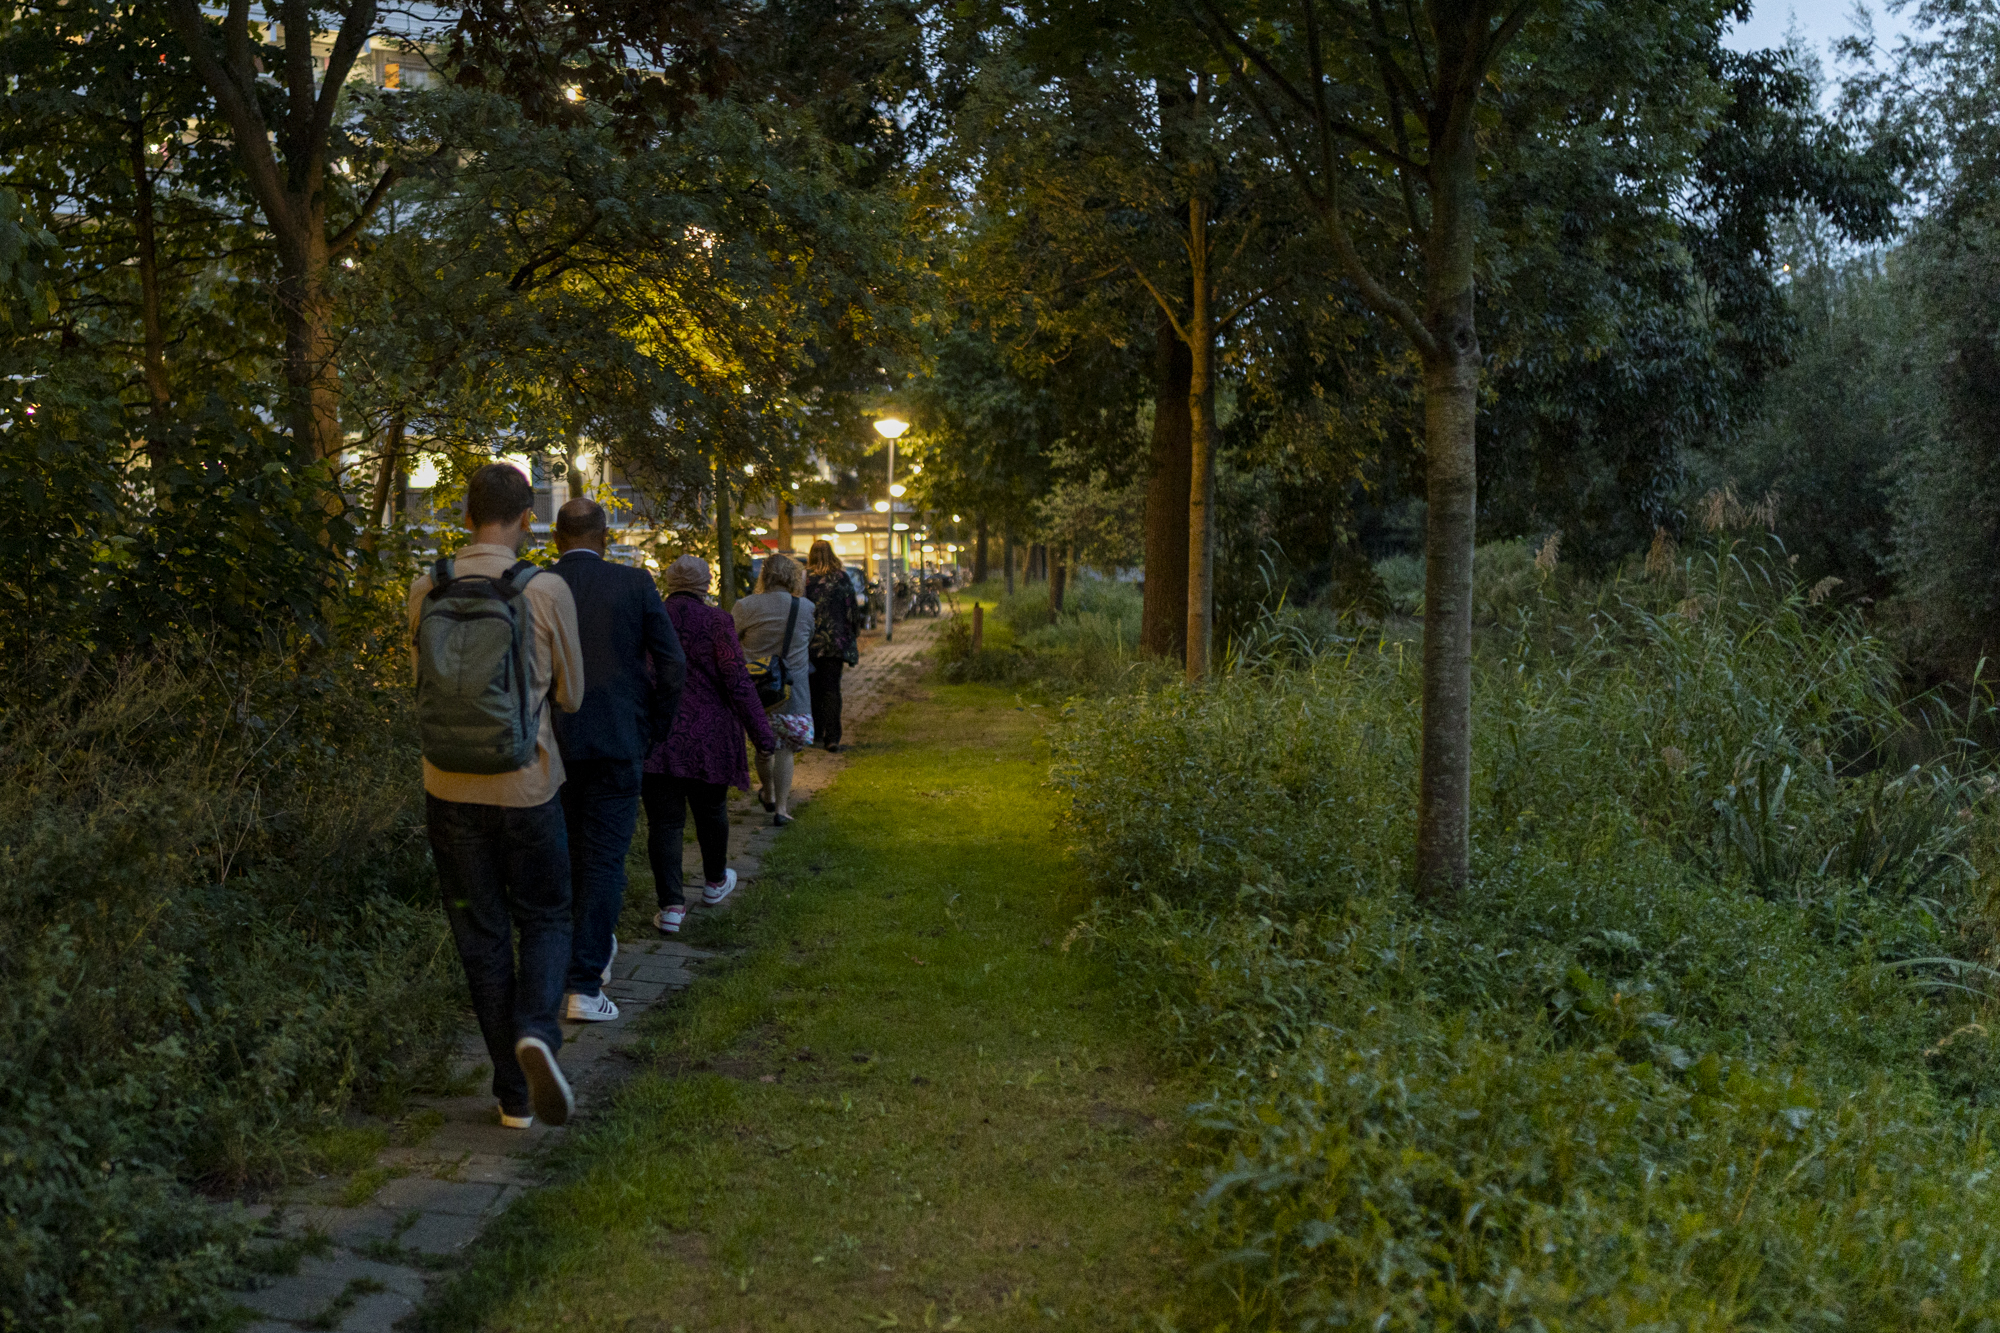 Light sensitive walk with District Committee Amsterdam-North                        Photo: Benny van der Plank